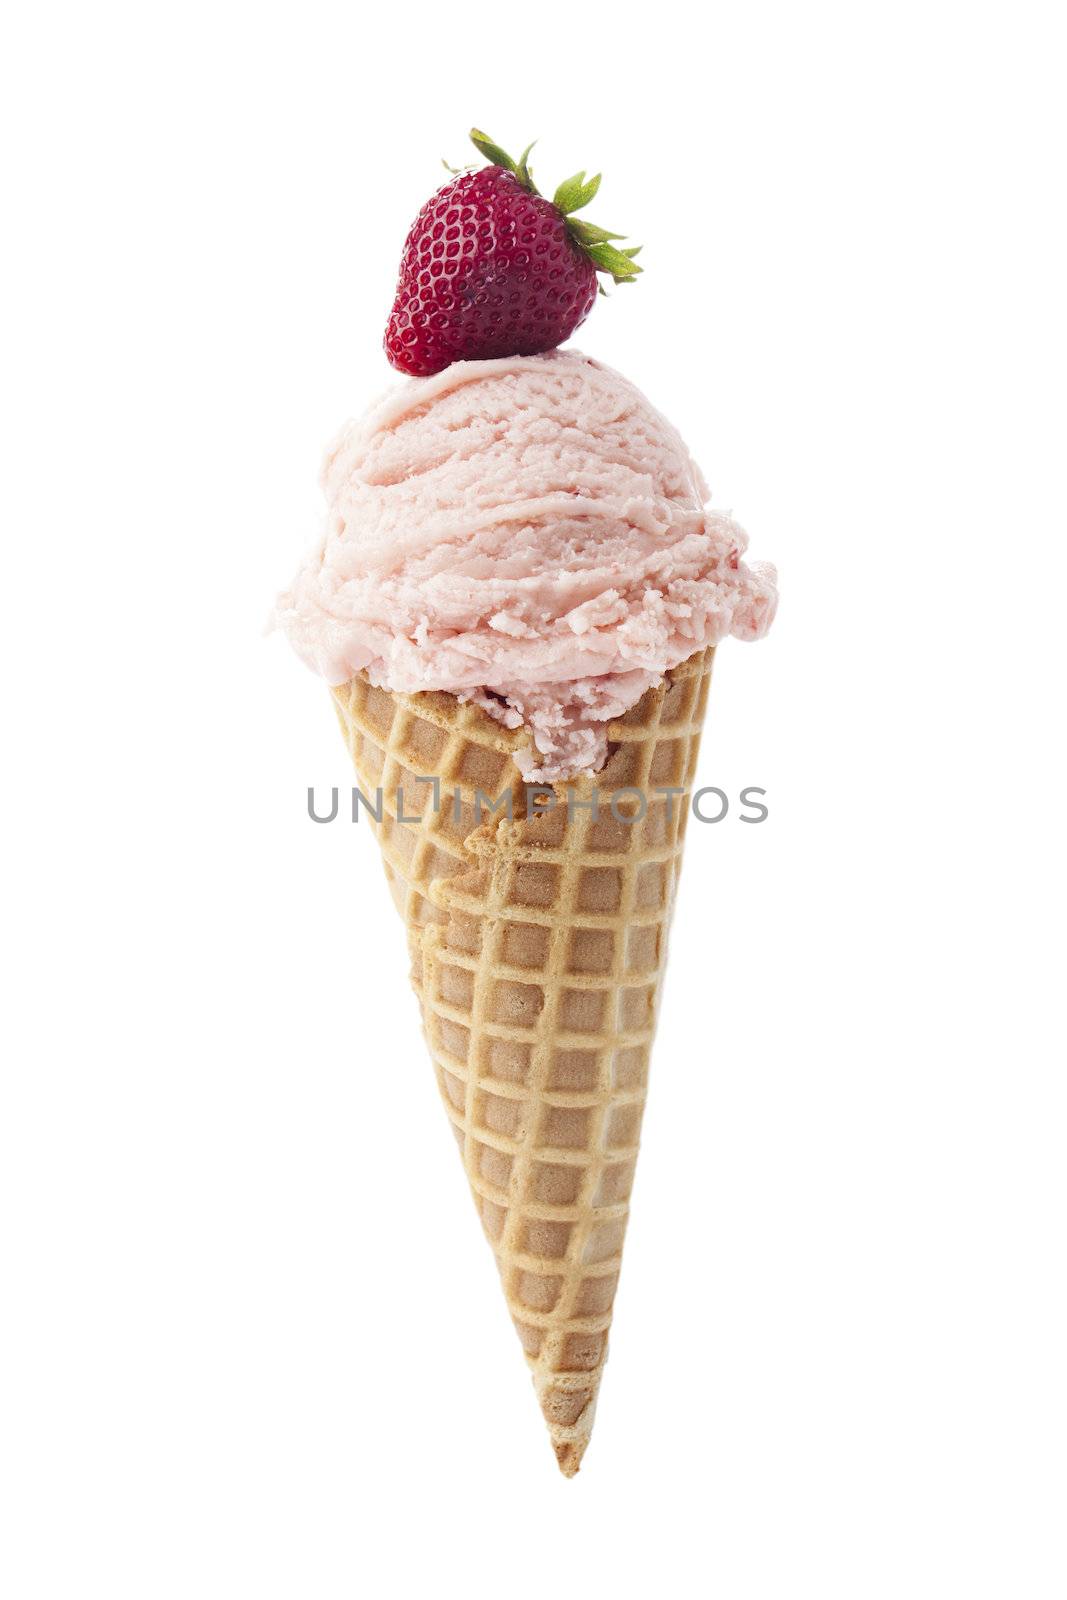 yogurt ice cream by kozzi